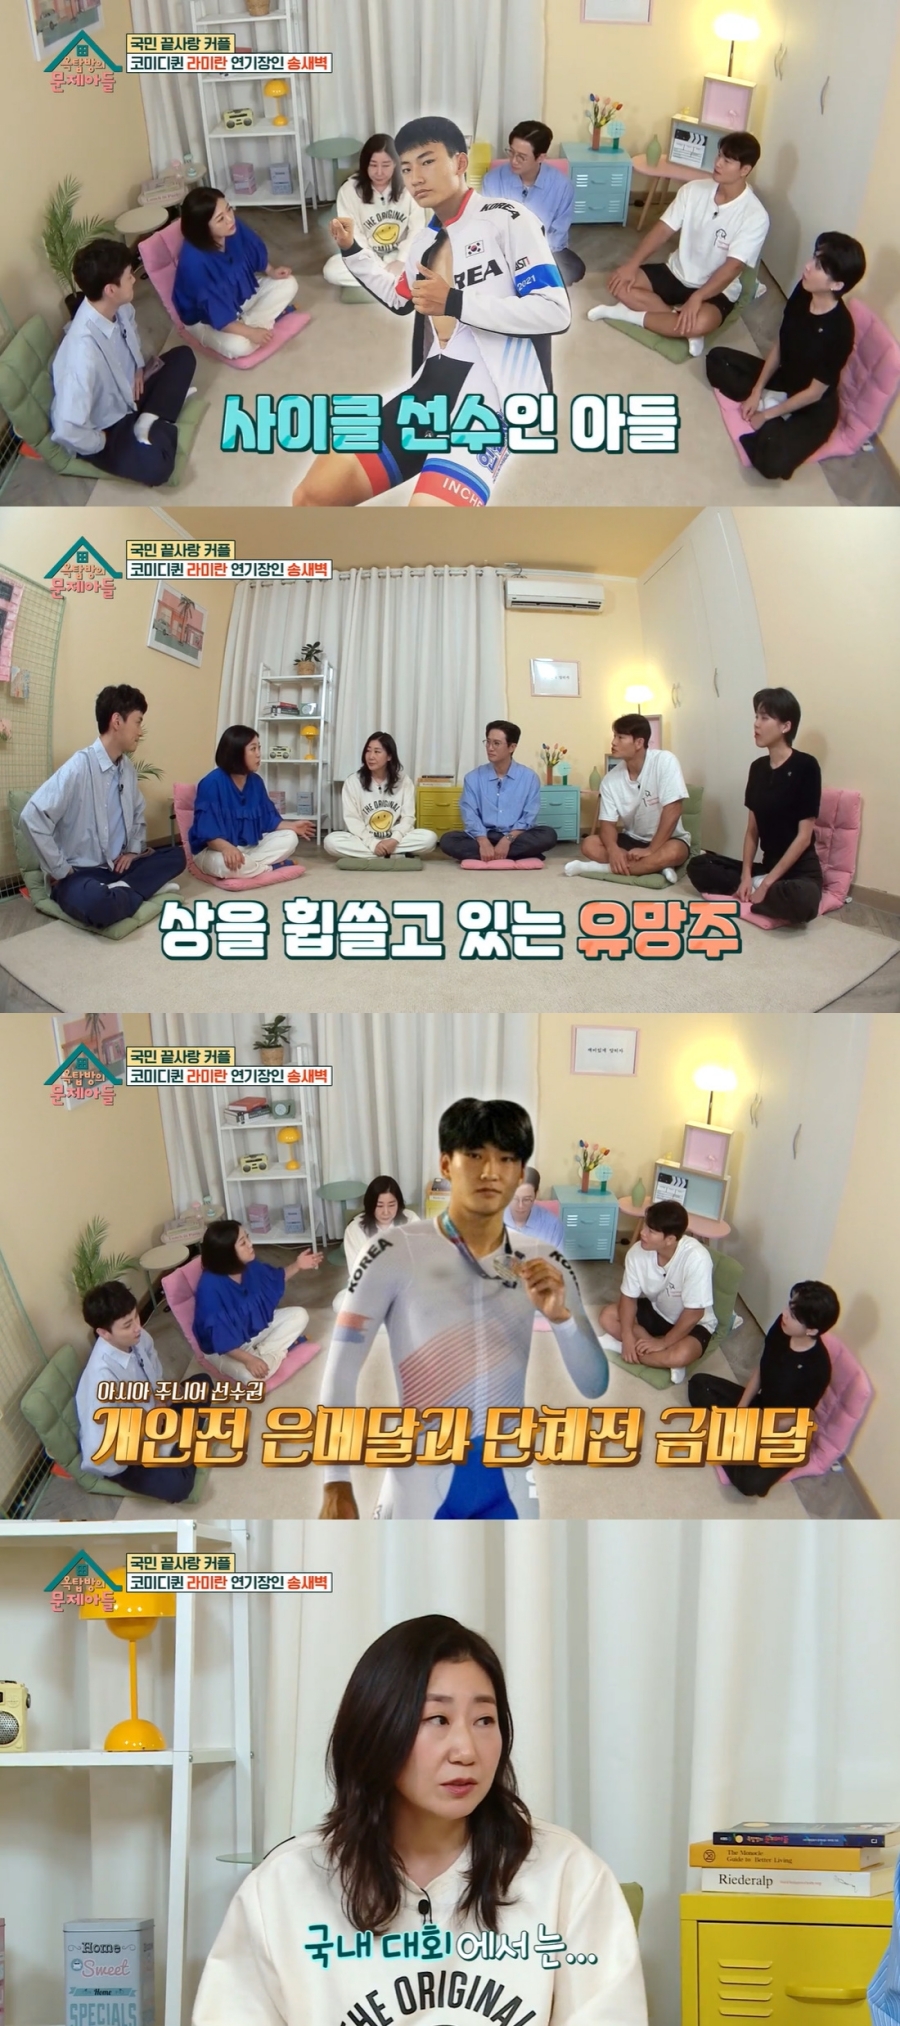 ▲ KBS2 예능 프로그램 '옥탑방의 문제아들' 배우 라미란. 출처| KBS